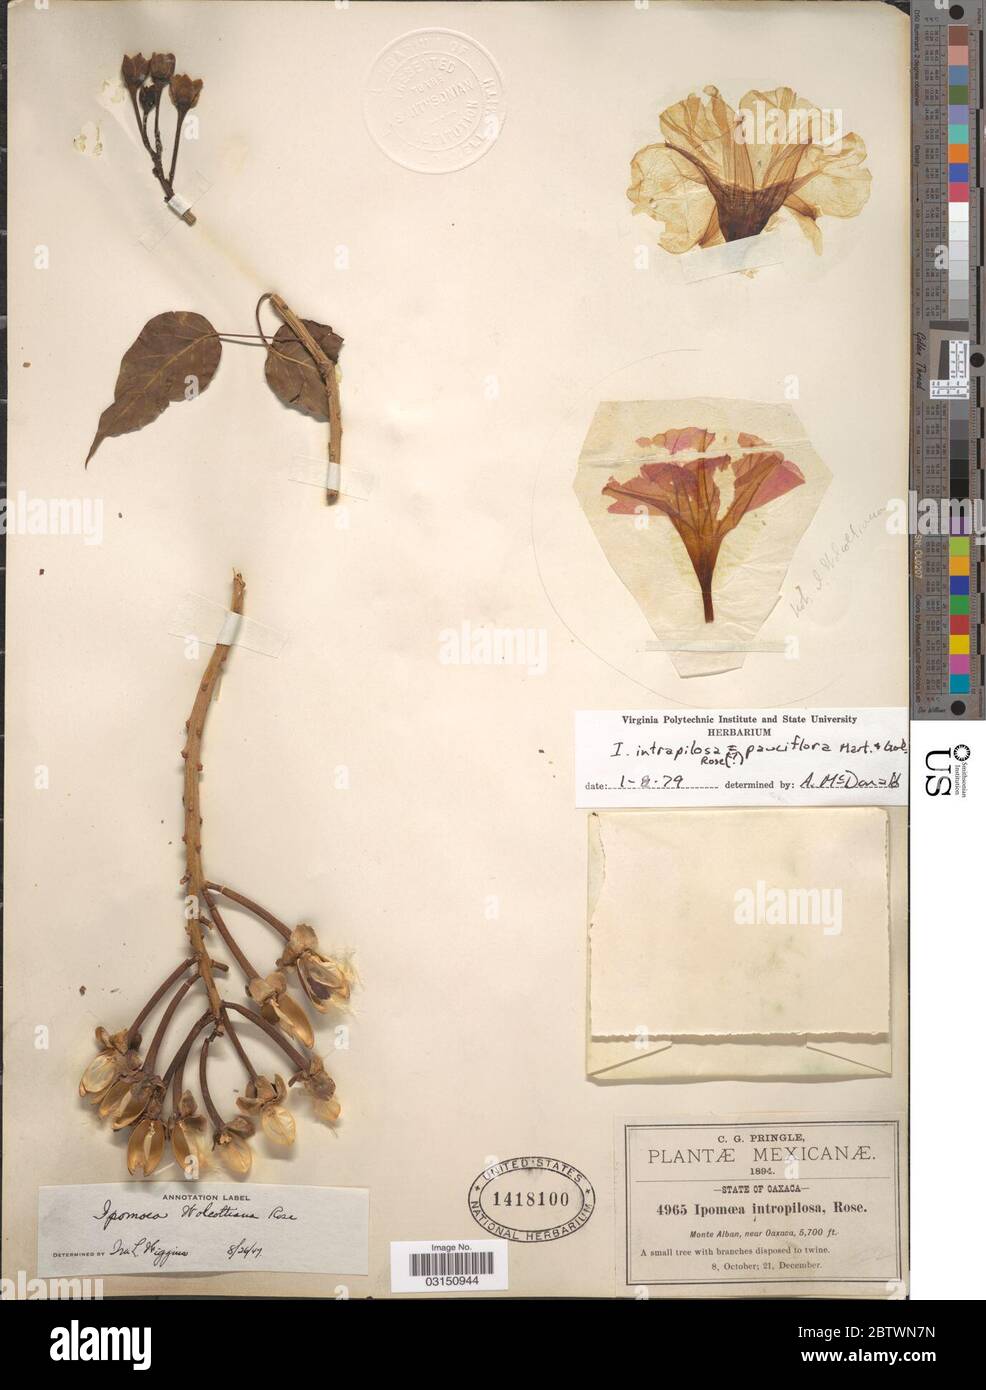 Ipomoea pauciflora M Martens Galeotti. Stock Photo